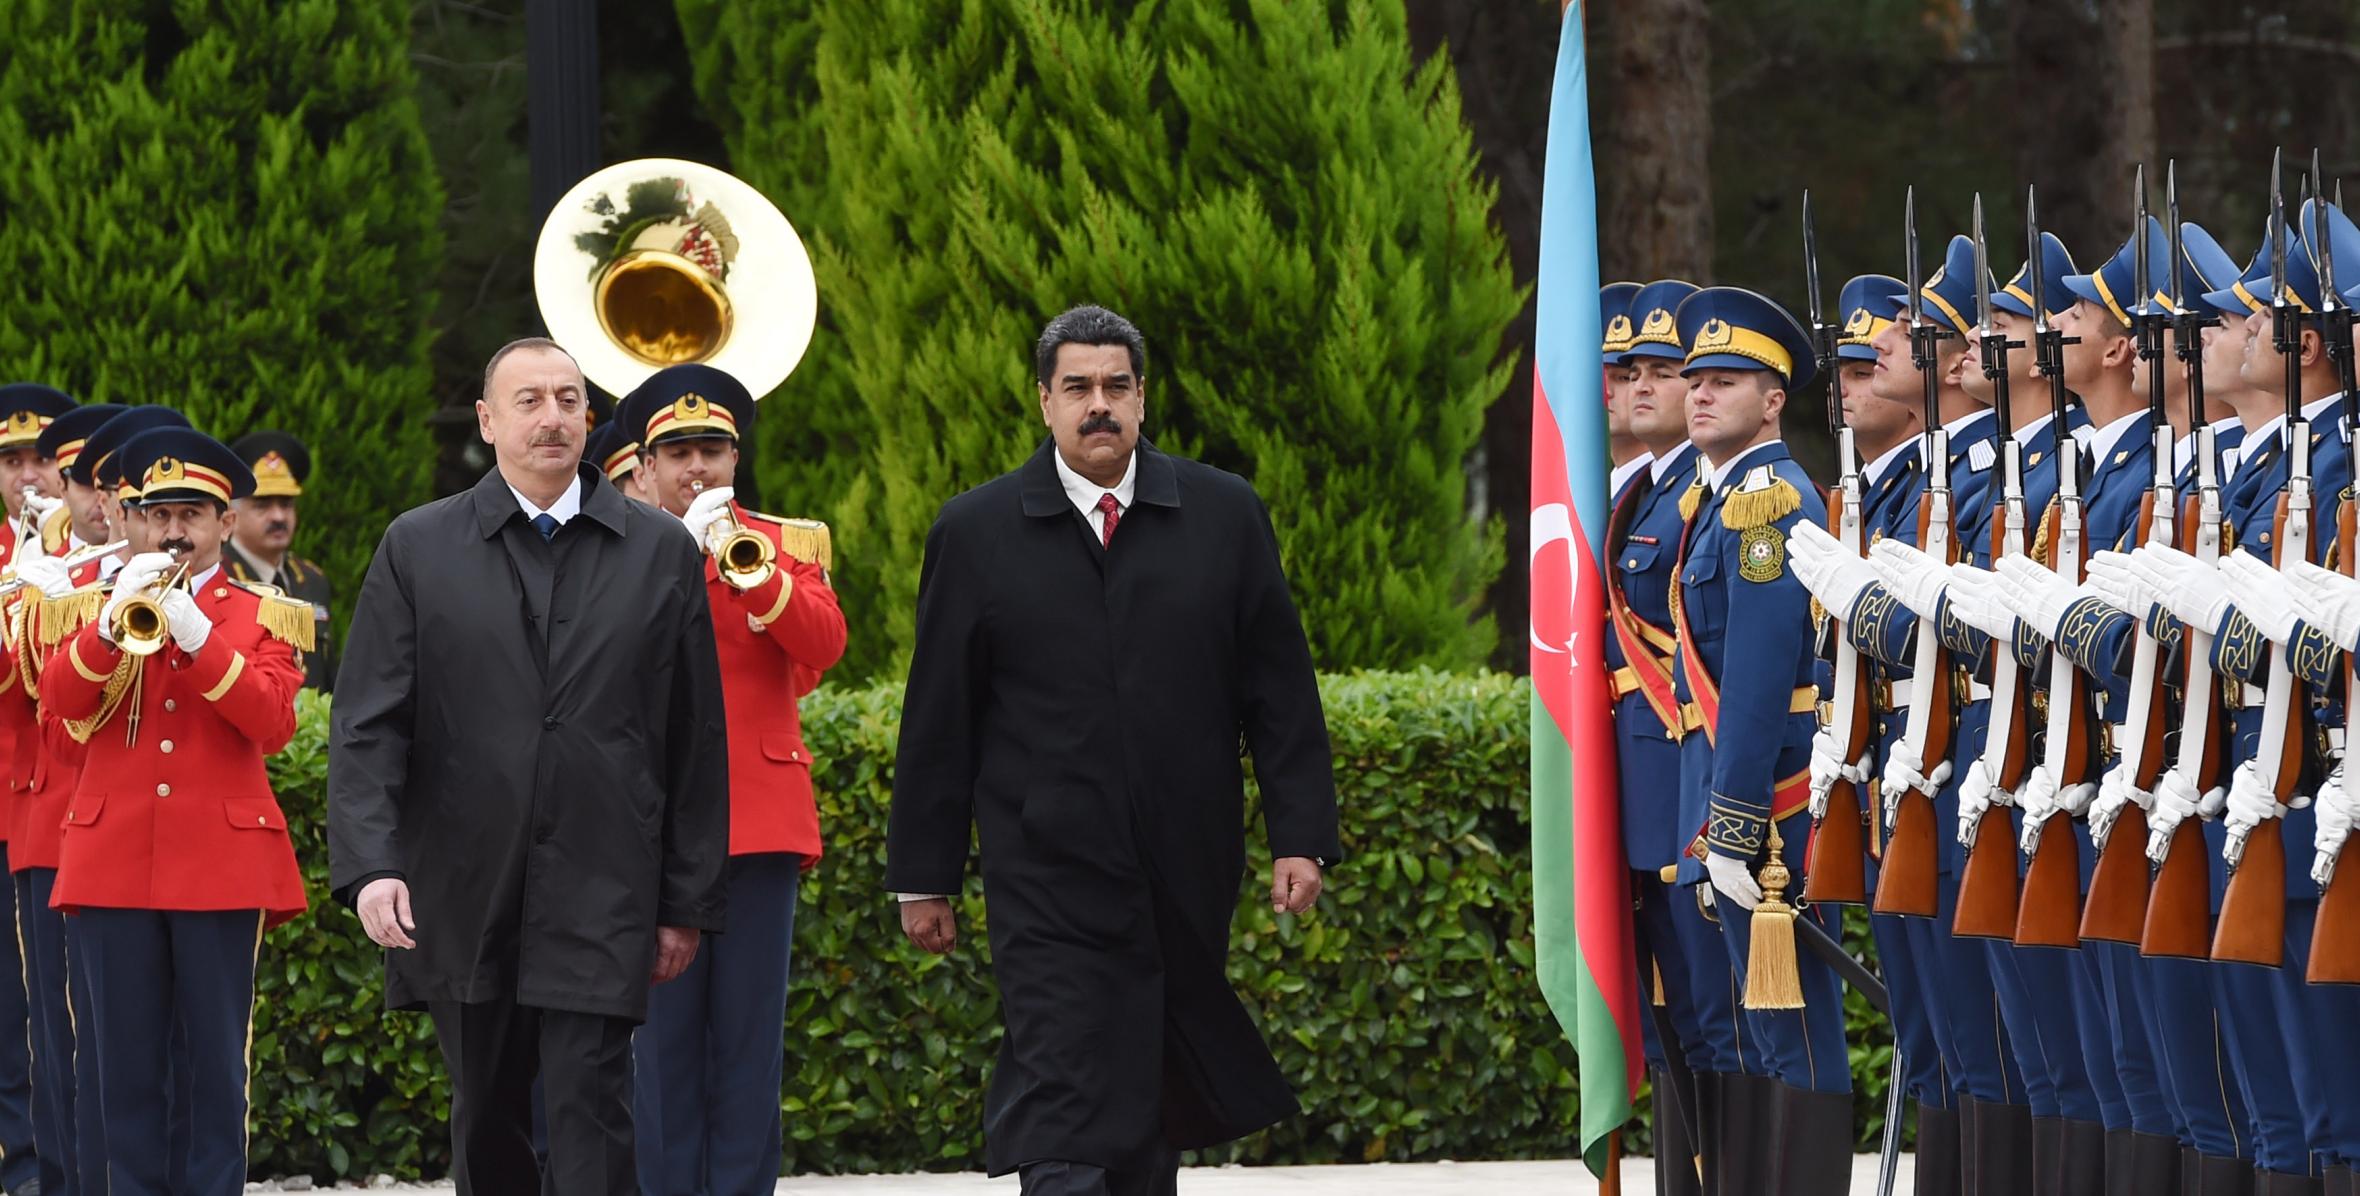 Official welcoming ceremony was held for Venezuelan President Nicolas Maduro